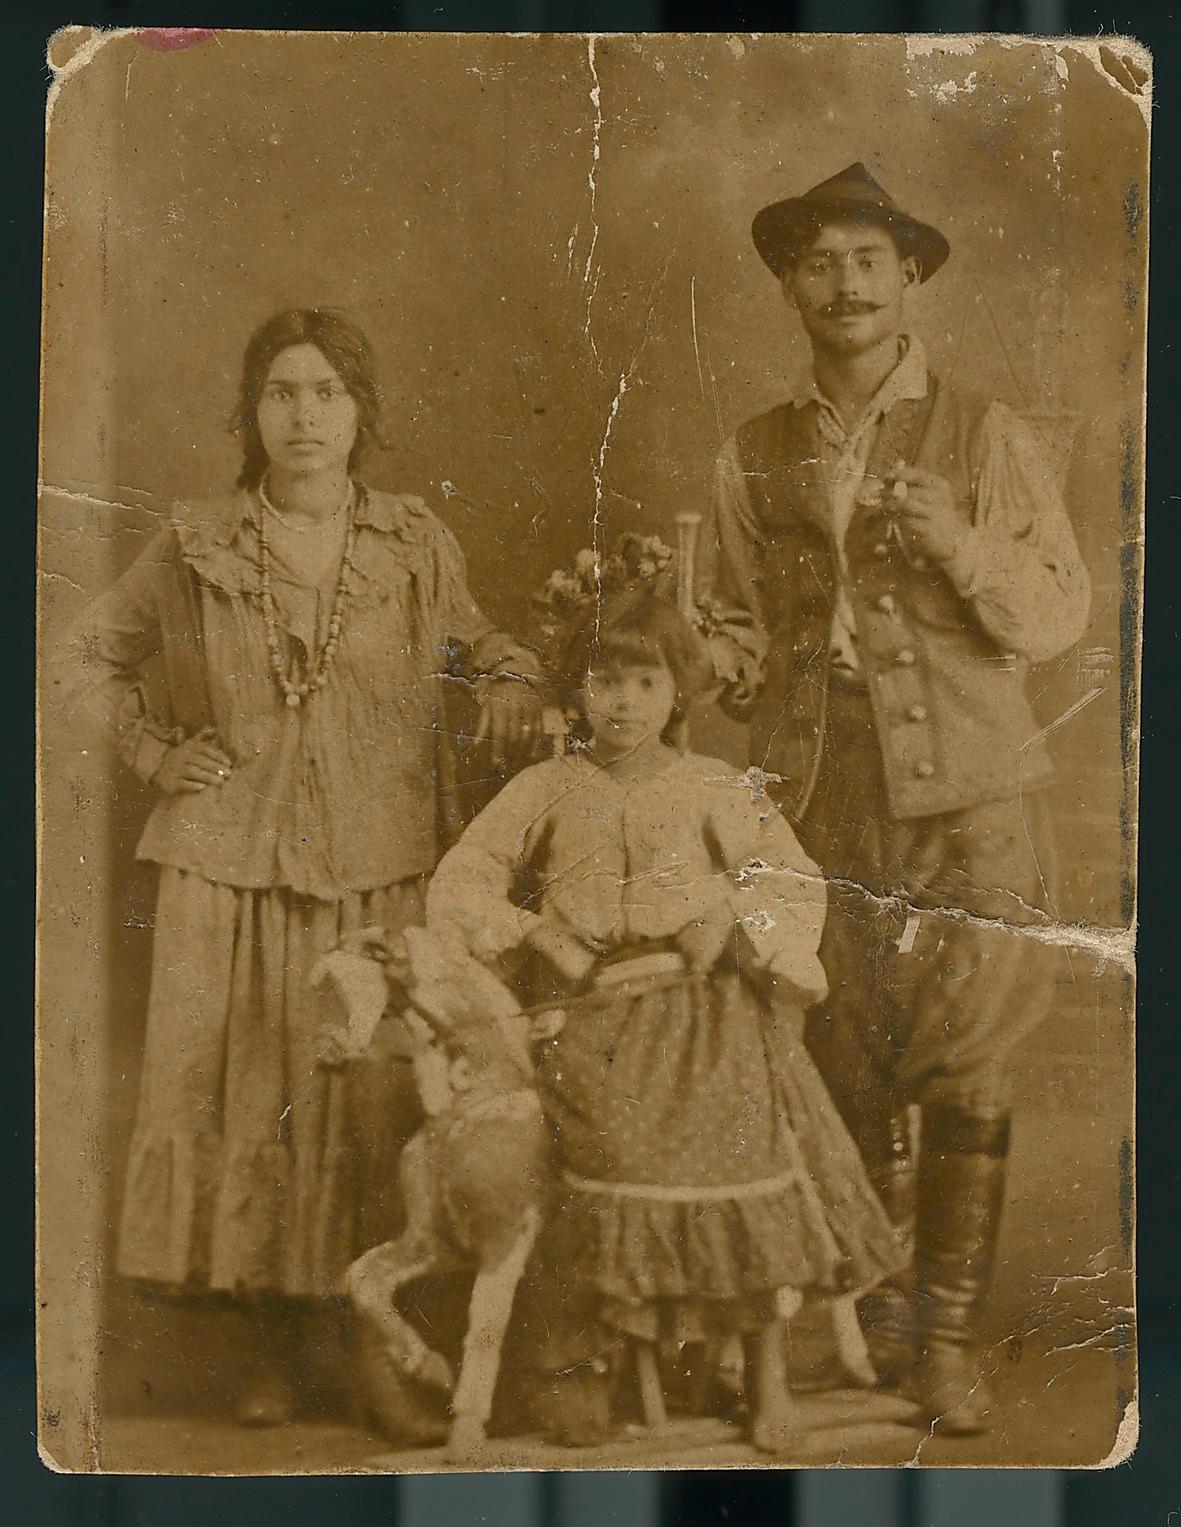 Jeanette Olssons gammelmormor och gammelmorfar med en av döttrarna i Mexiko 1917.